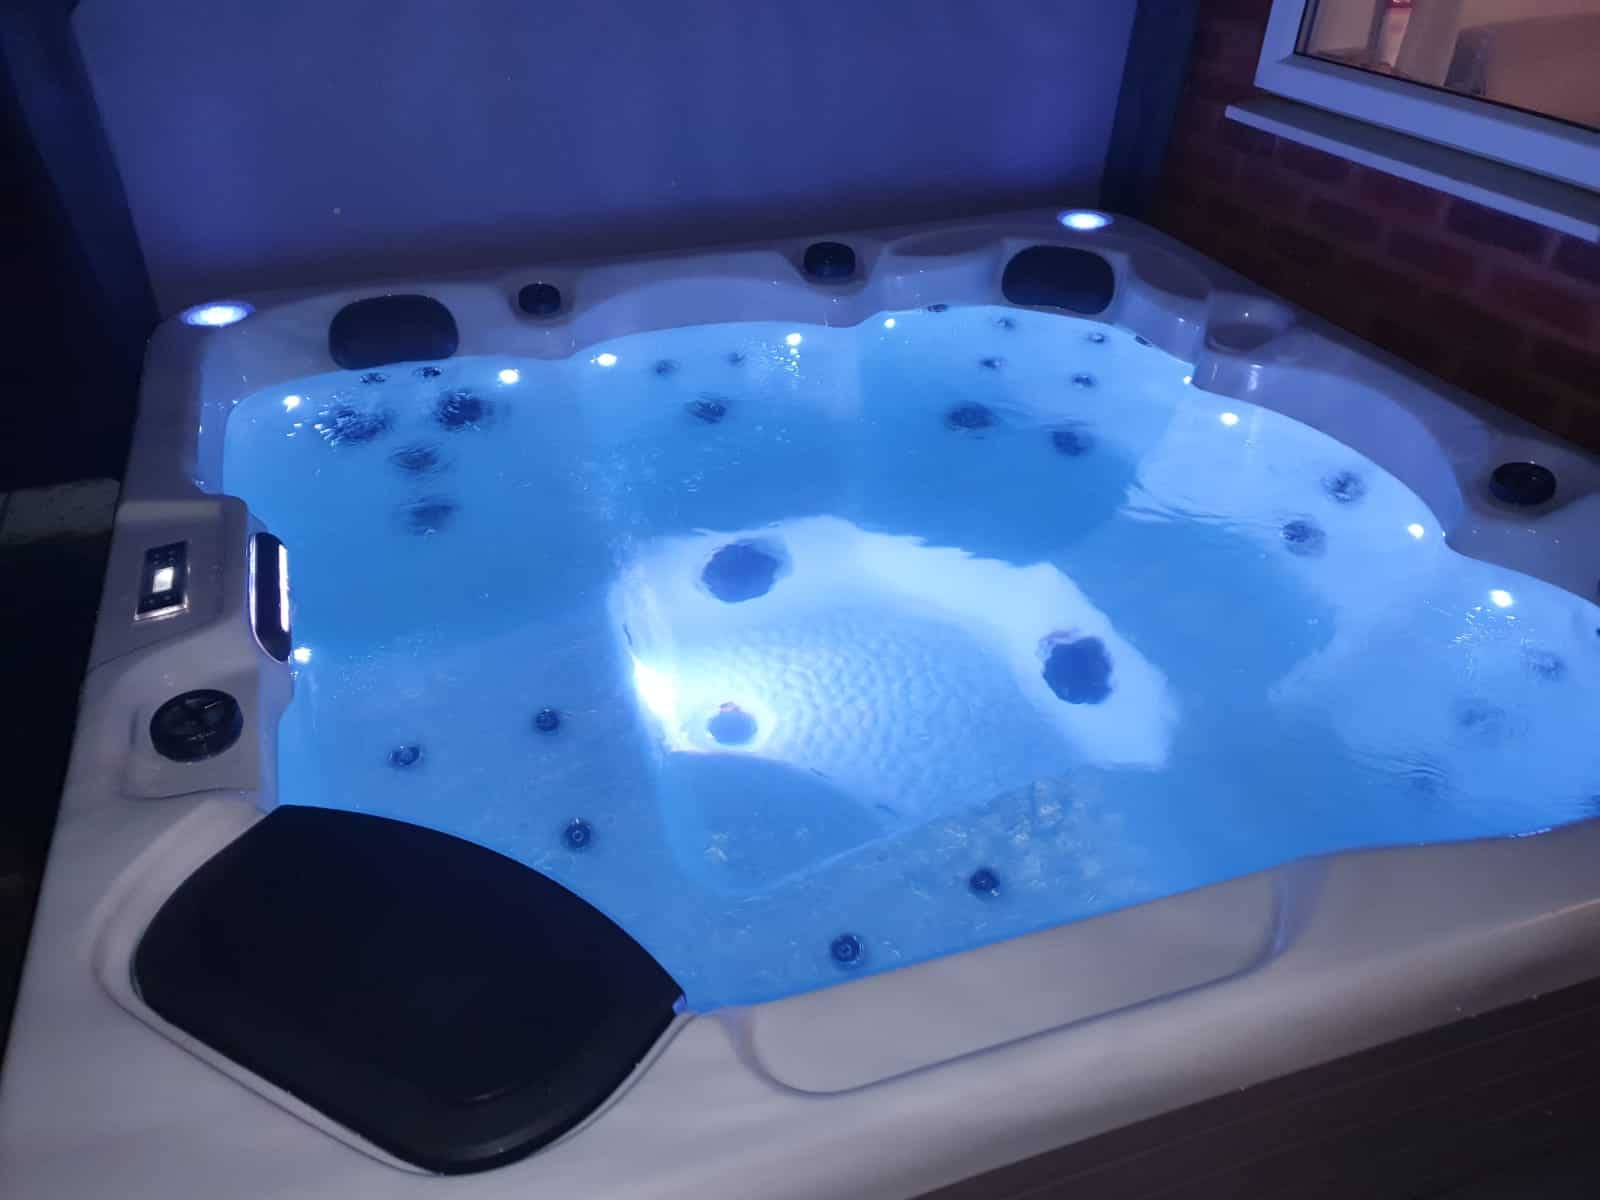 Trident Elite Hot tub review